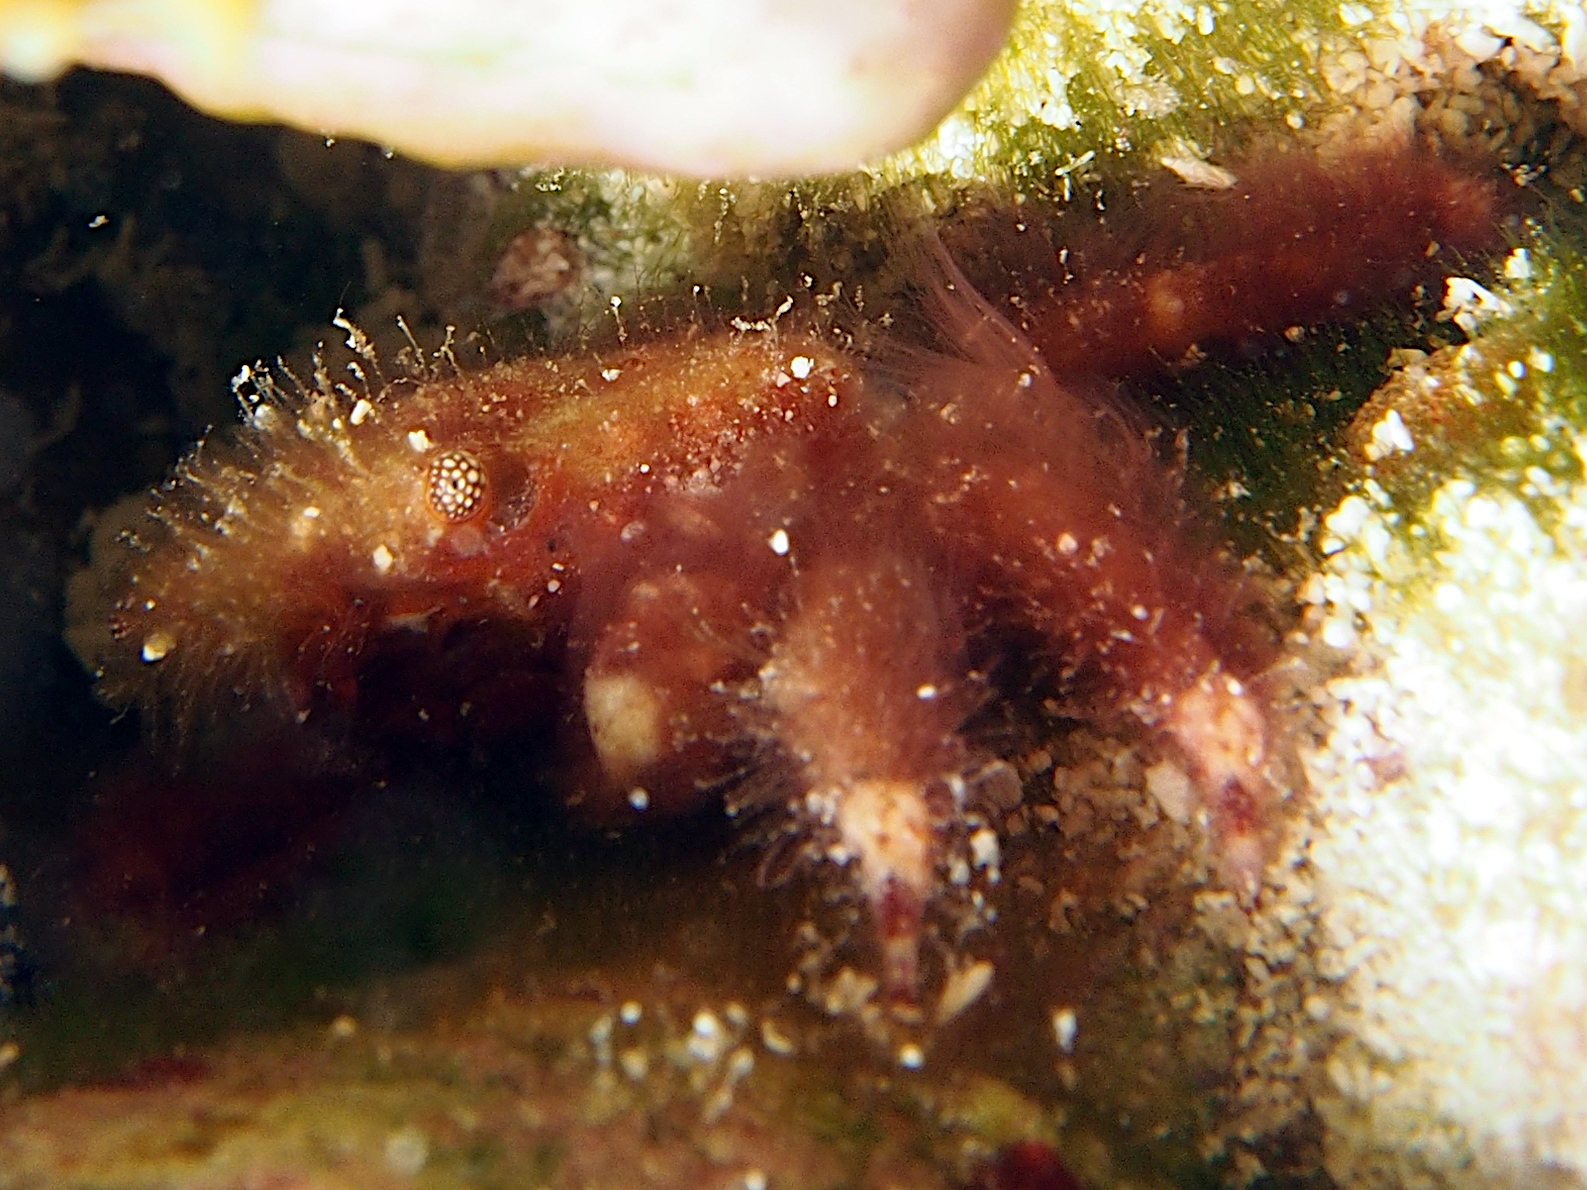 Banded Clinging Crab - Mithrax cinctimanus